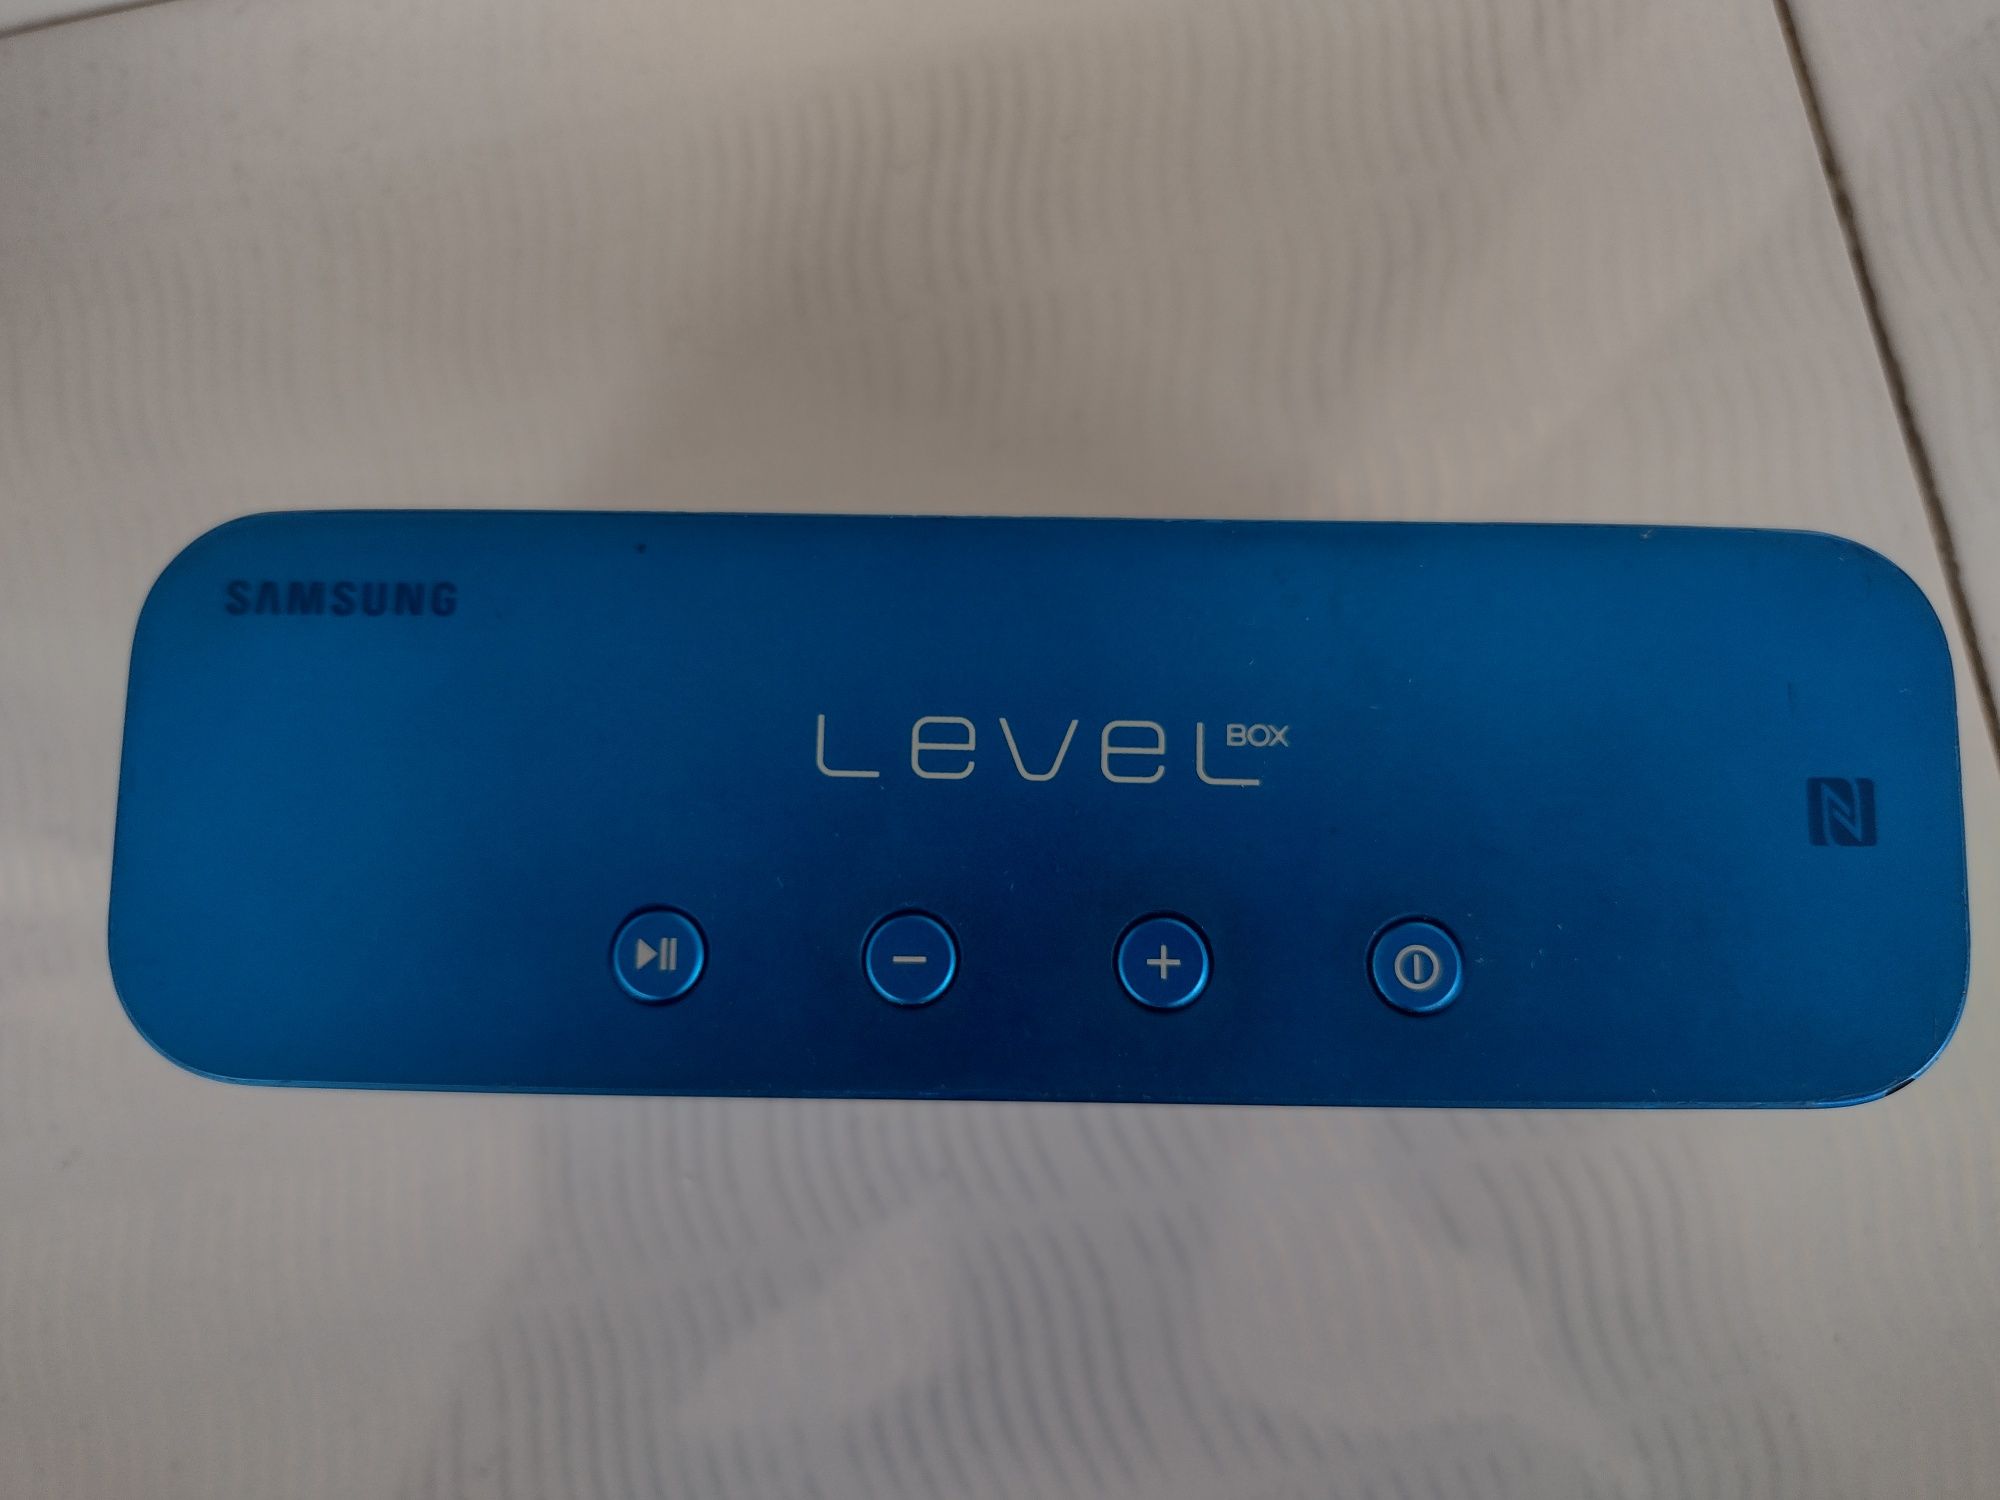 Boxa Samsung Level box mini